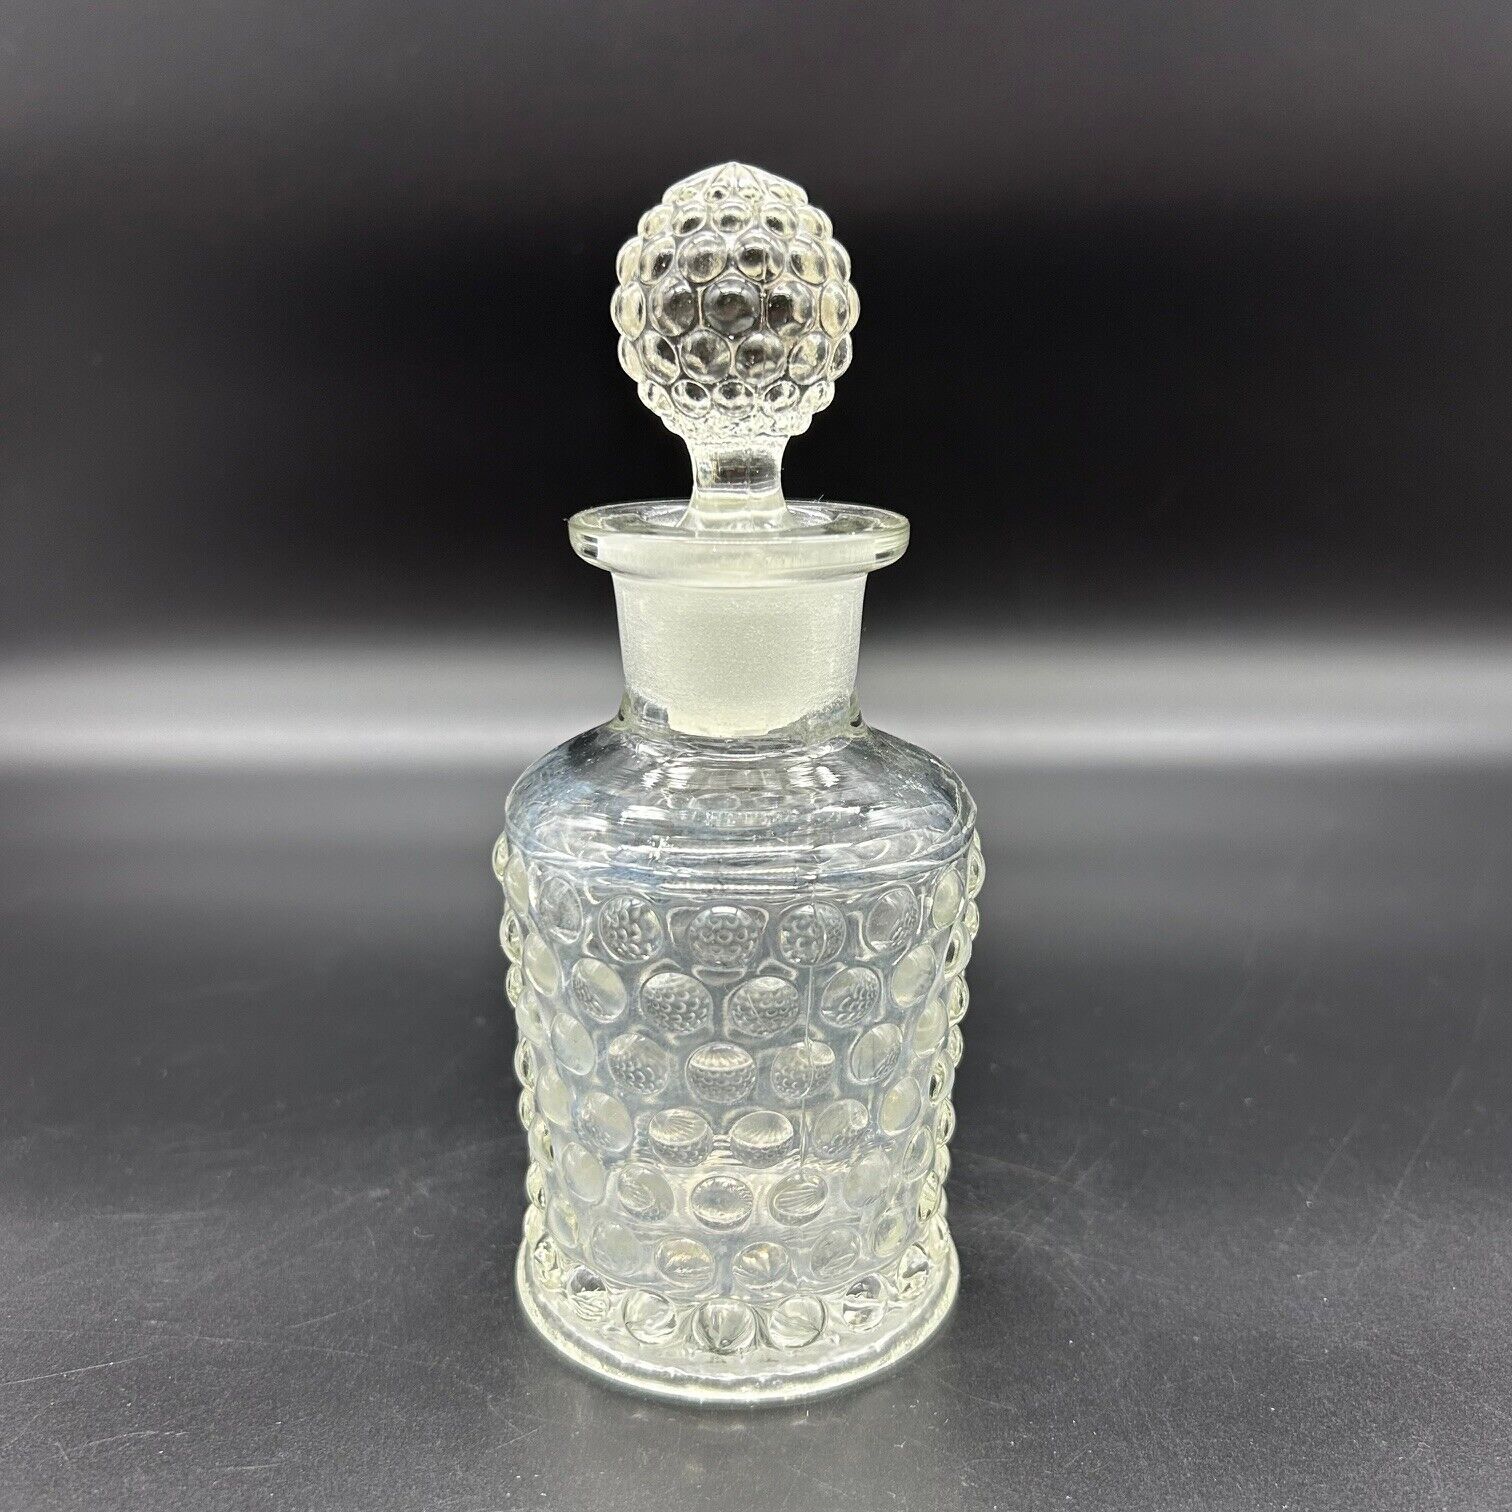 Antique Princess Arlene Perfume Bottle with Stopper S. S. Pierce Co Boston Mass